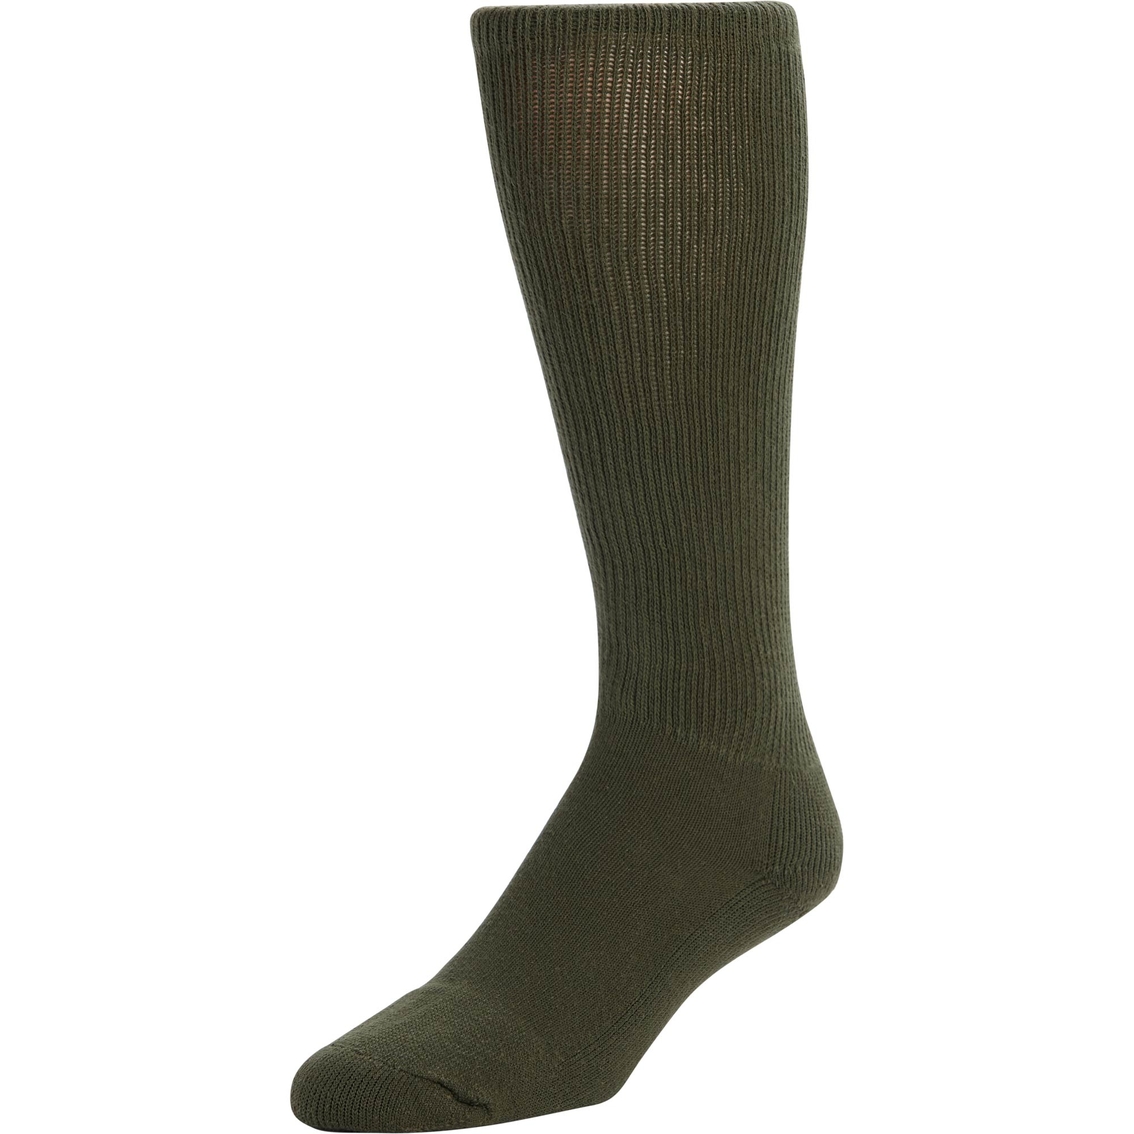 Dlats Green Boot Socks | Uniforms | Military | Shop The Exchange